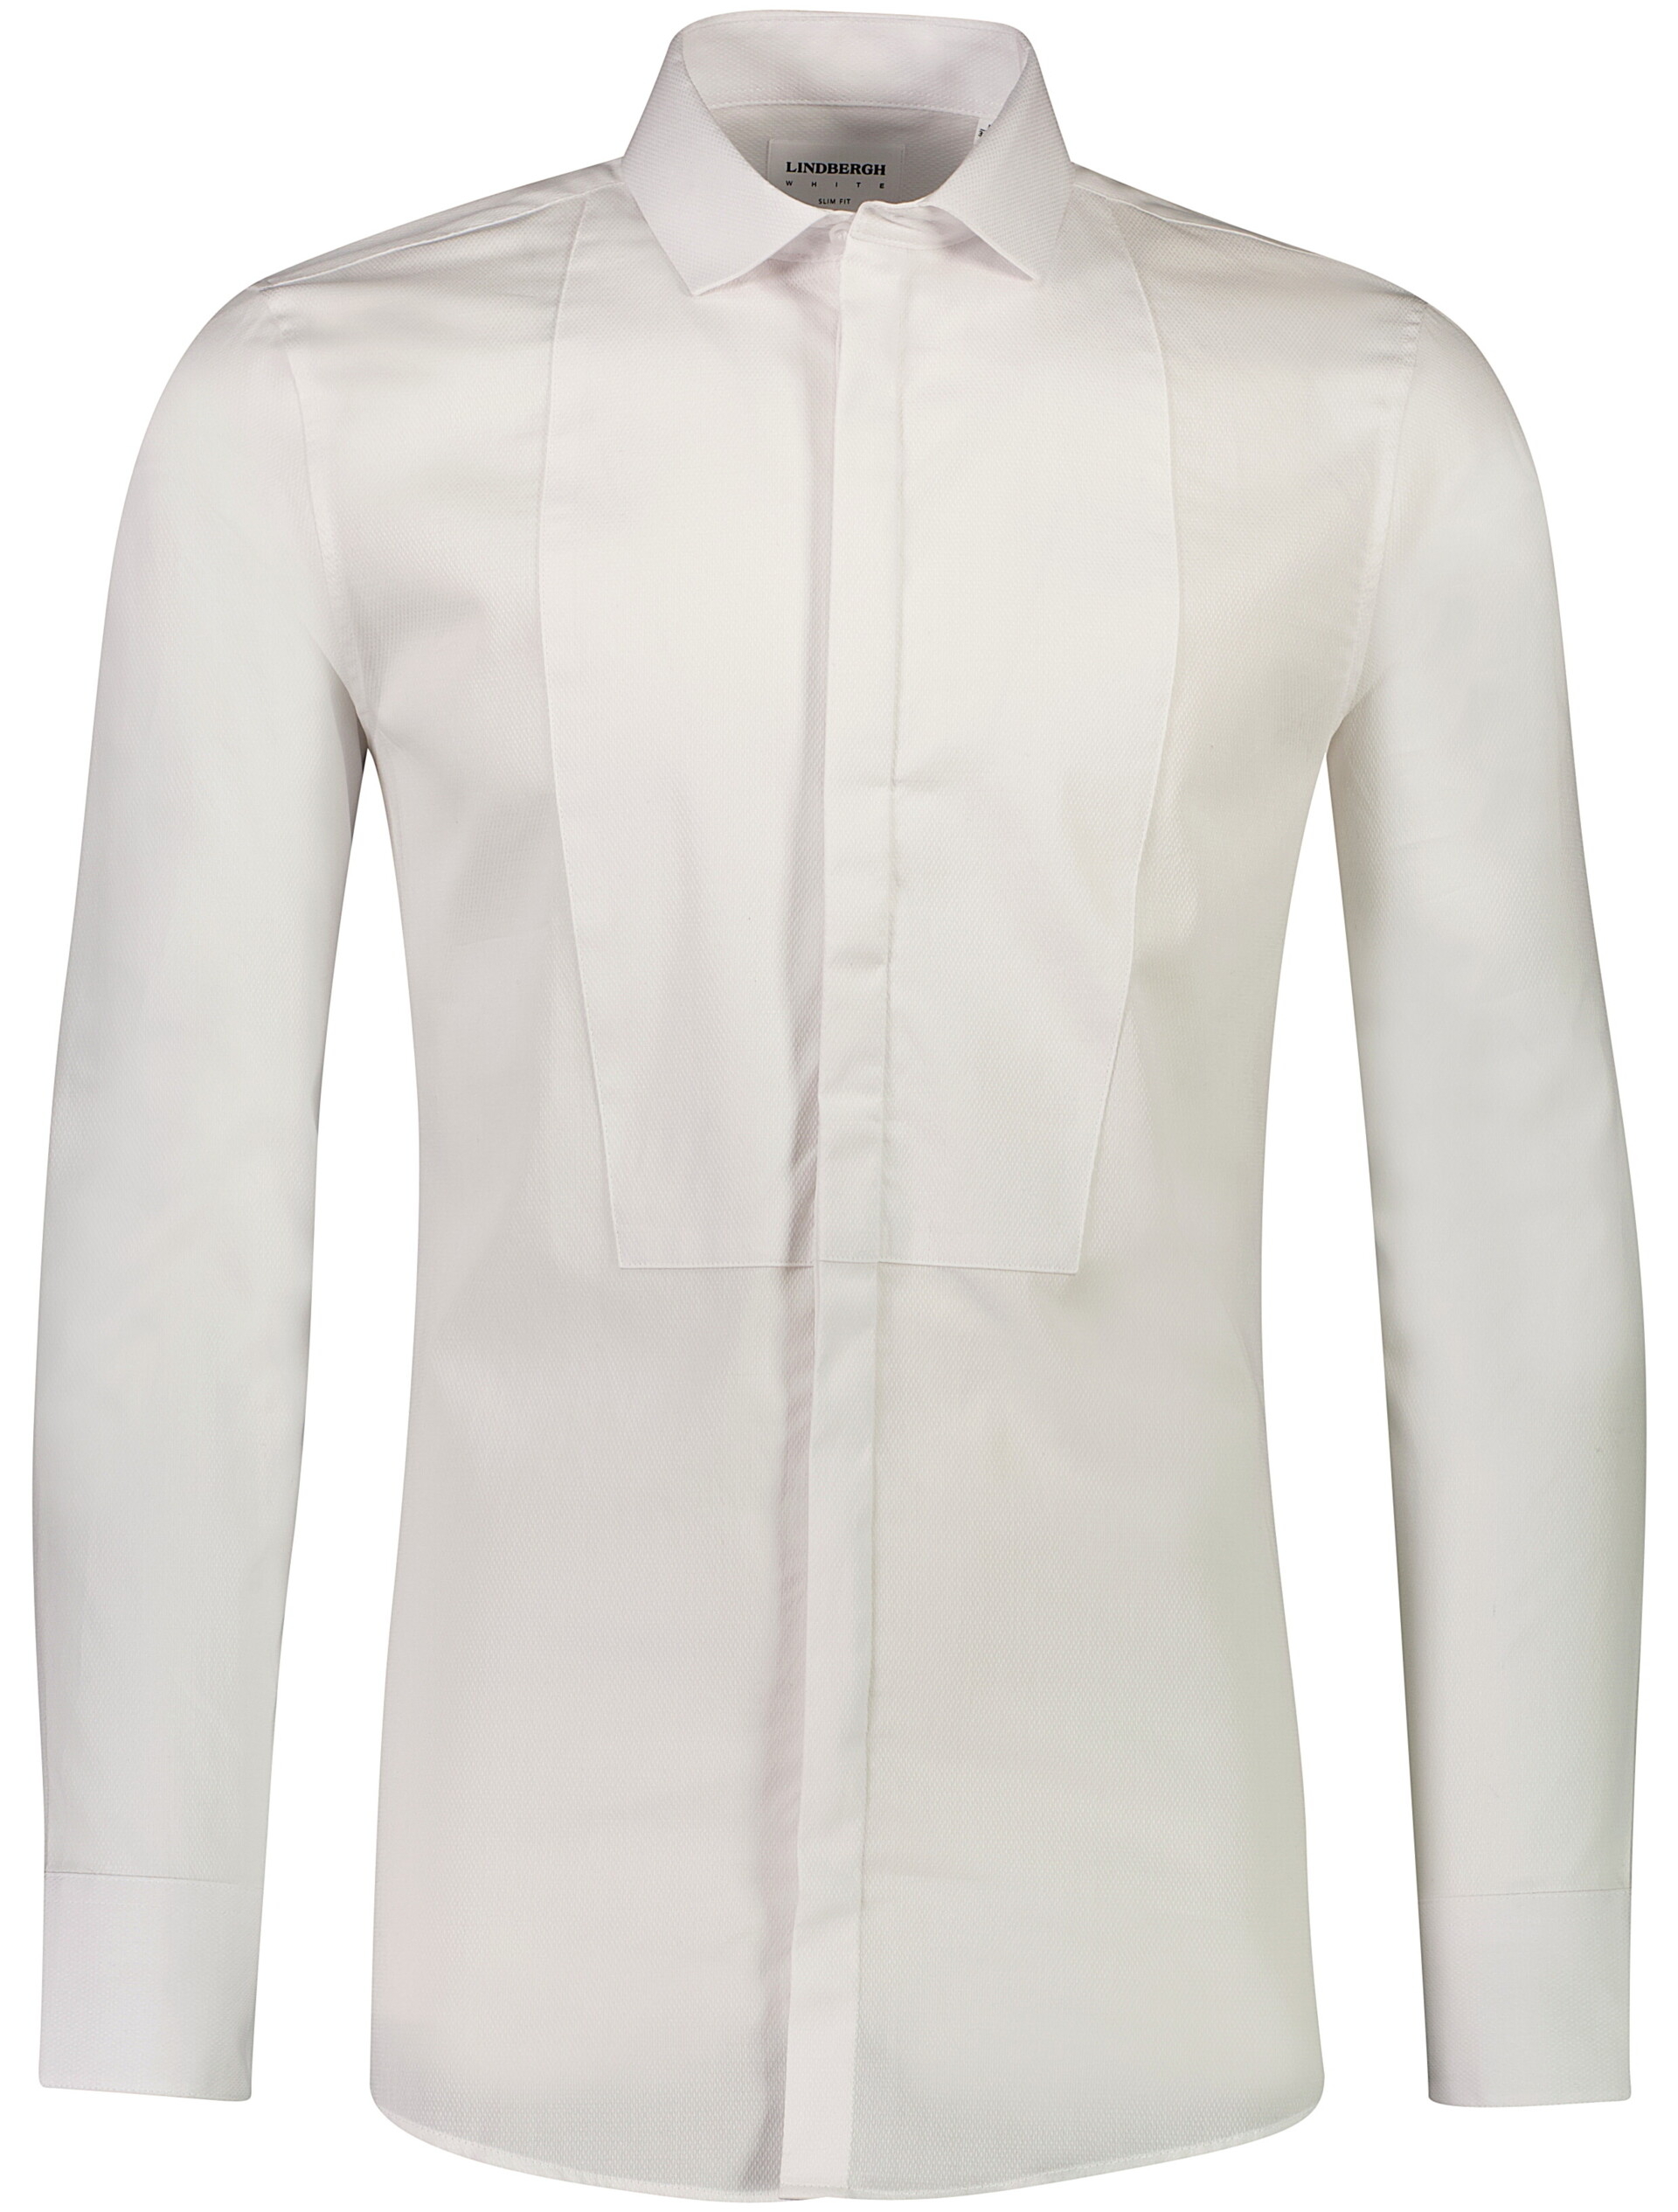 Lindbergh Business shirt white / white